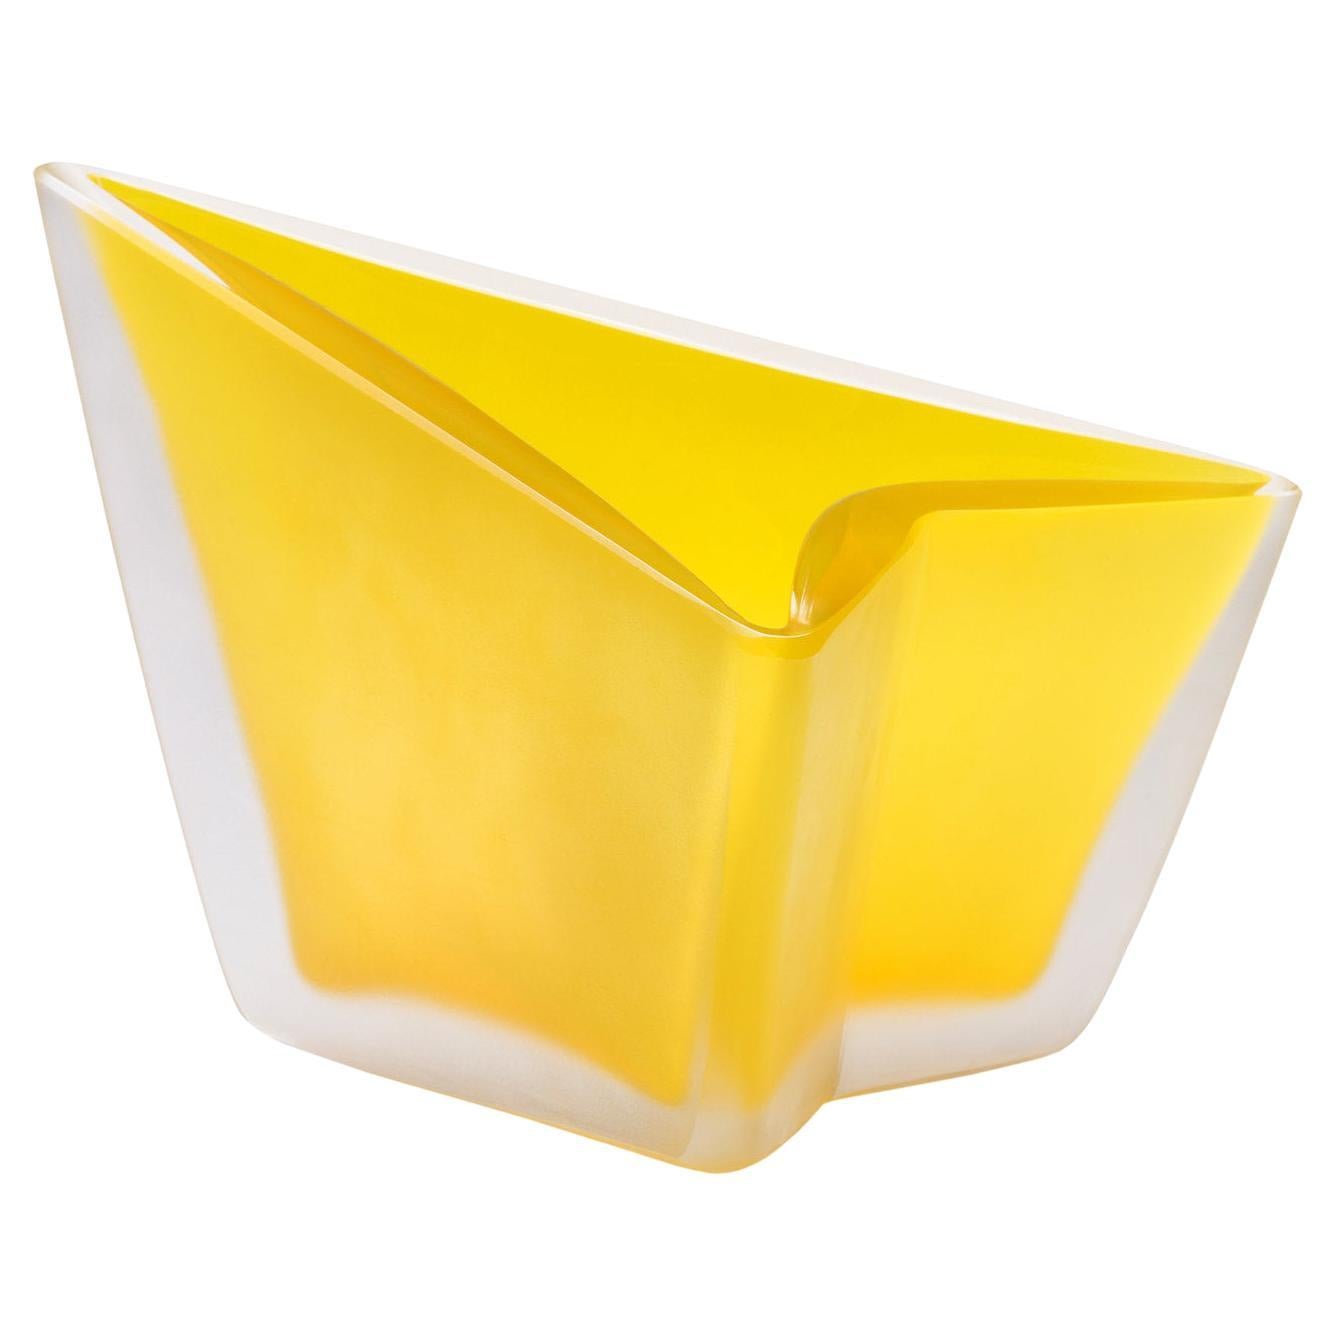 Freccia Yellow Low Vase by Alessandro Mendini